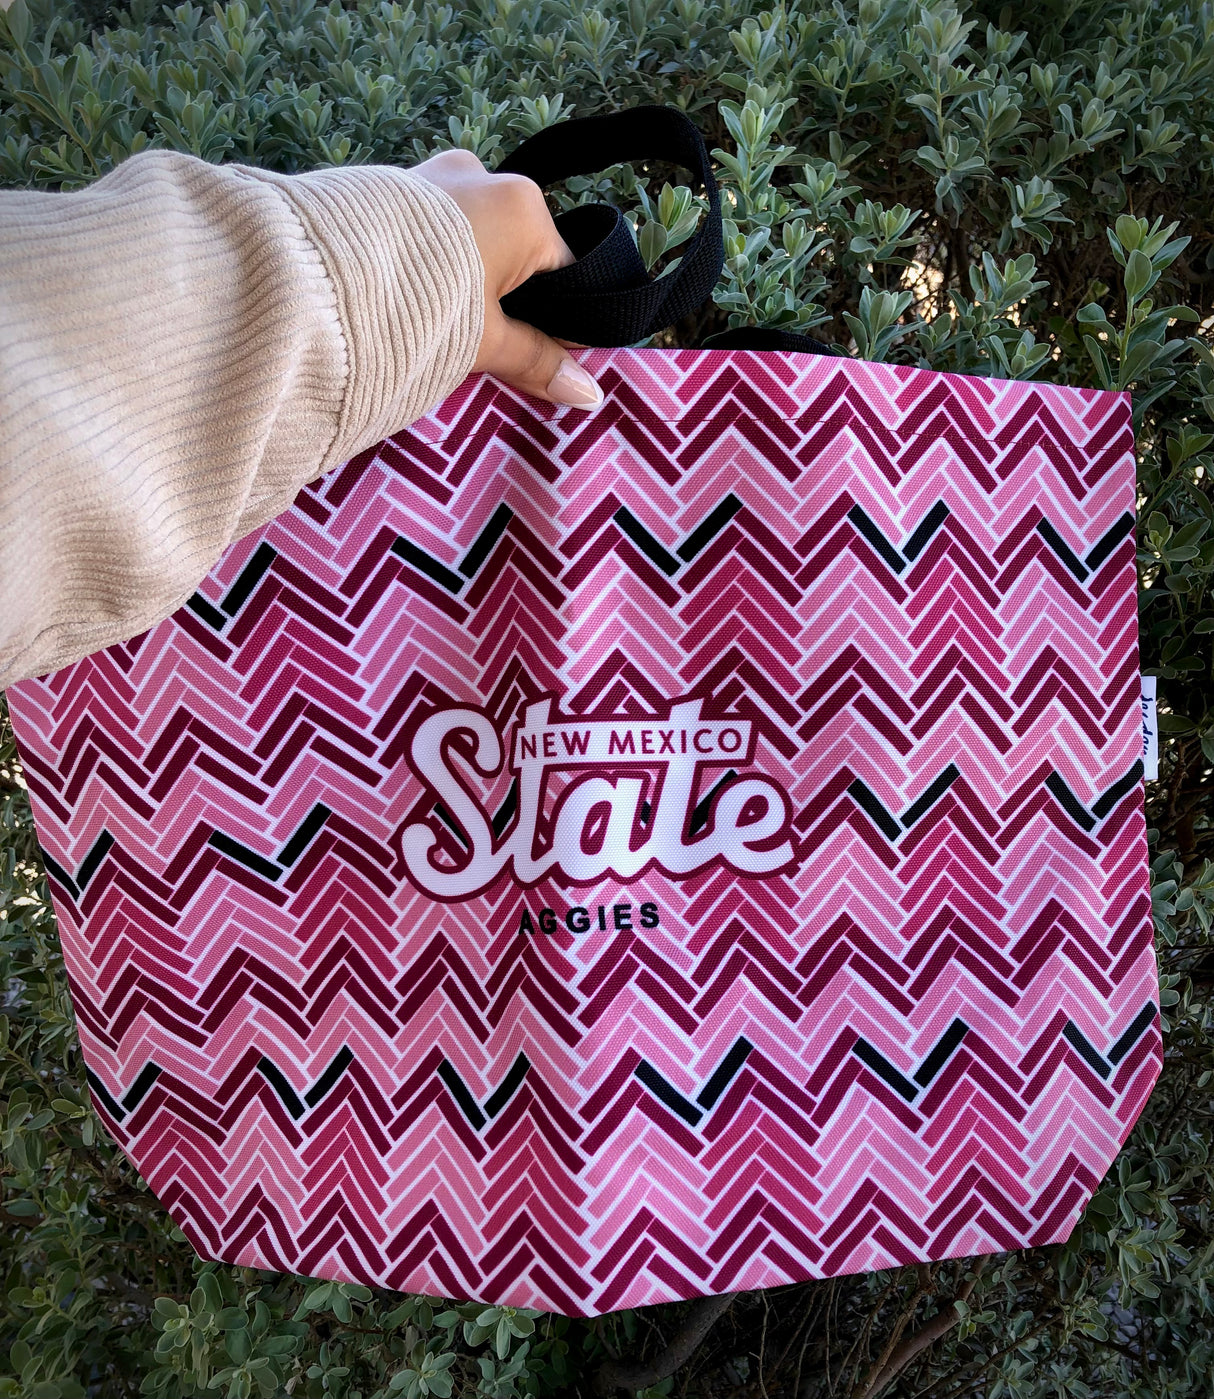 New Mexico State Galleria Tote Bag